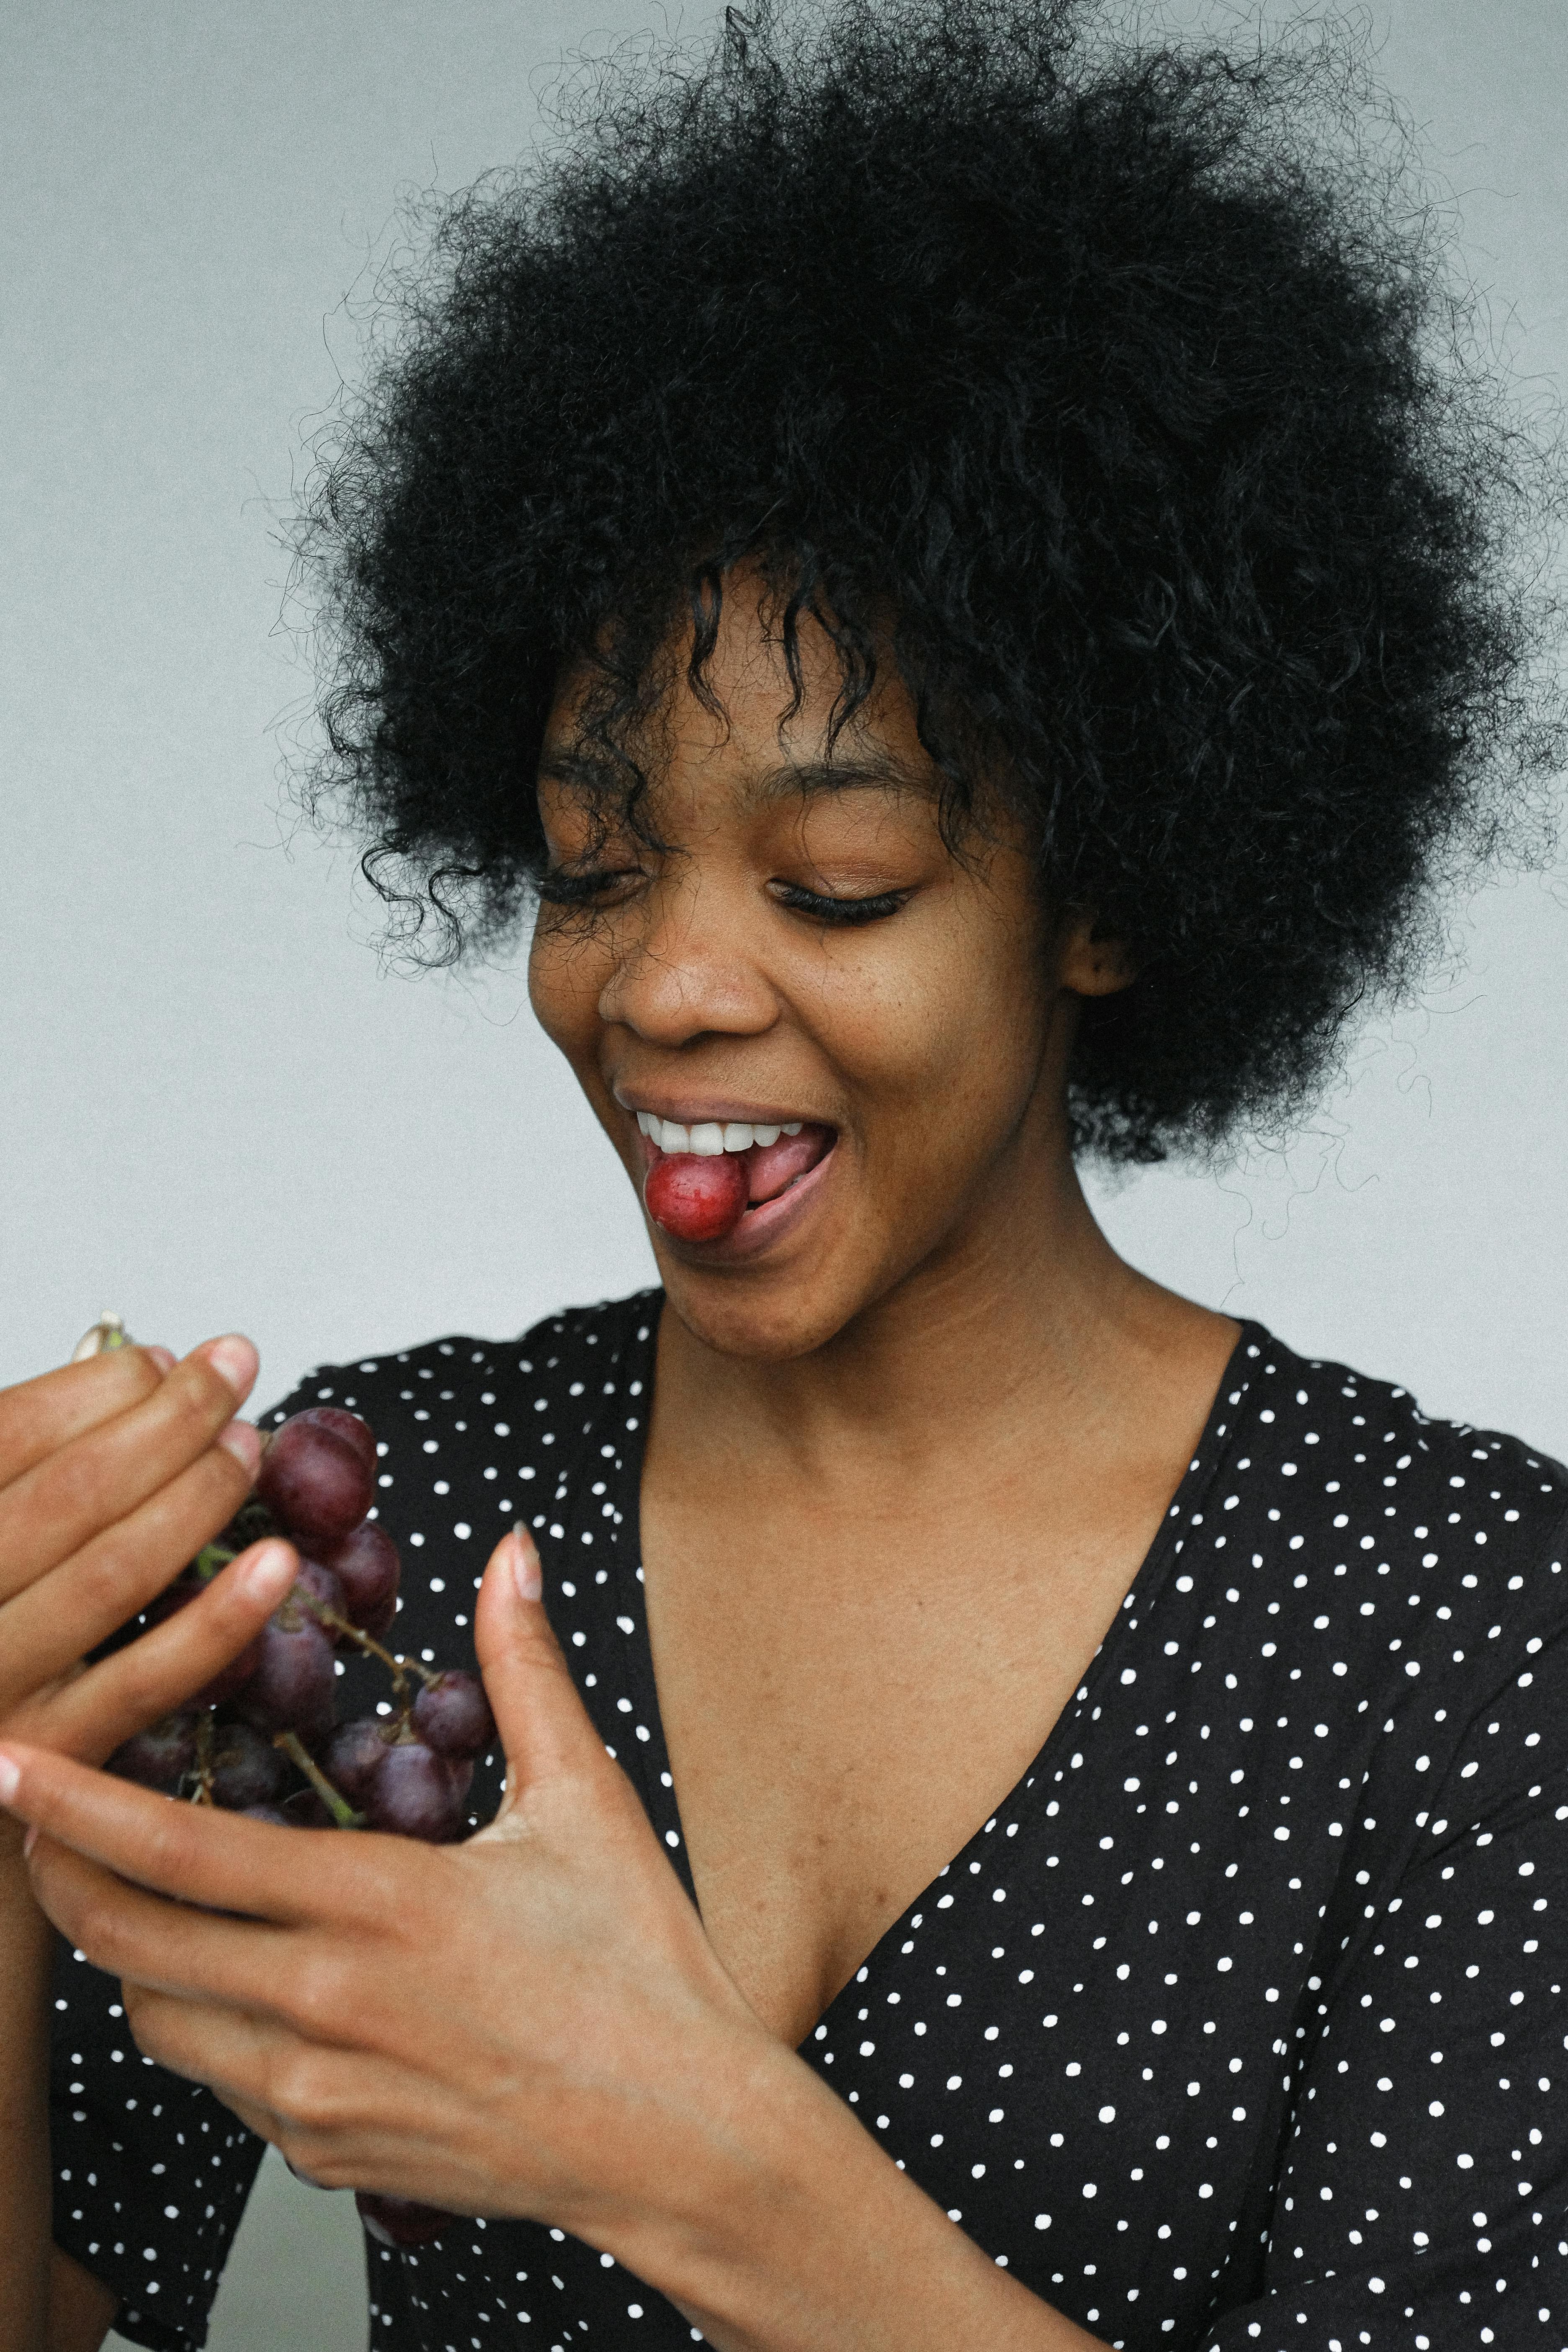 playful black woman eating grapes in studio